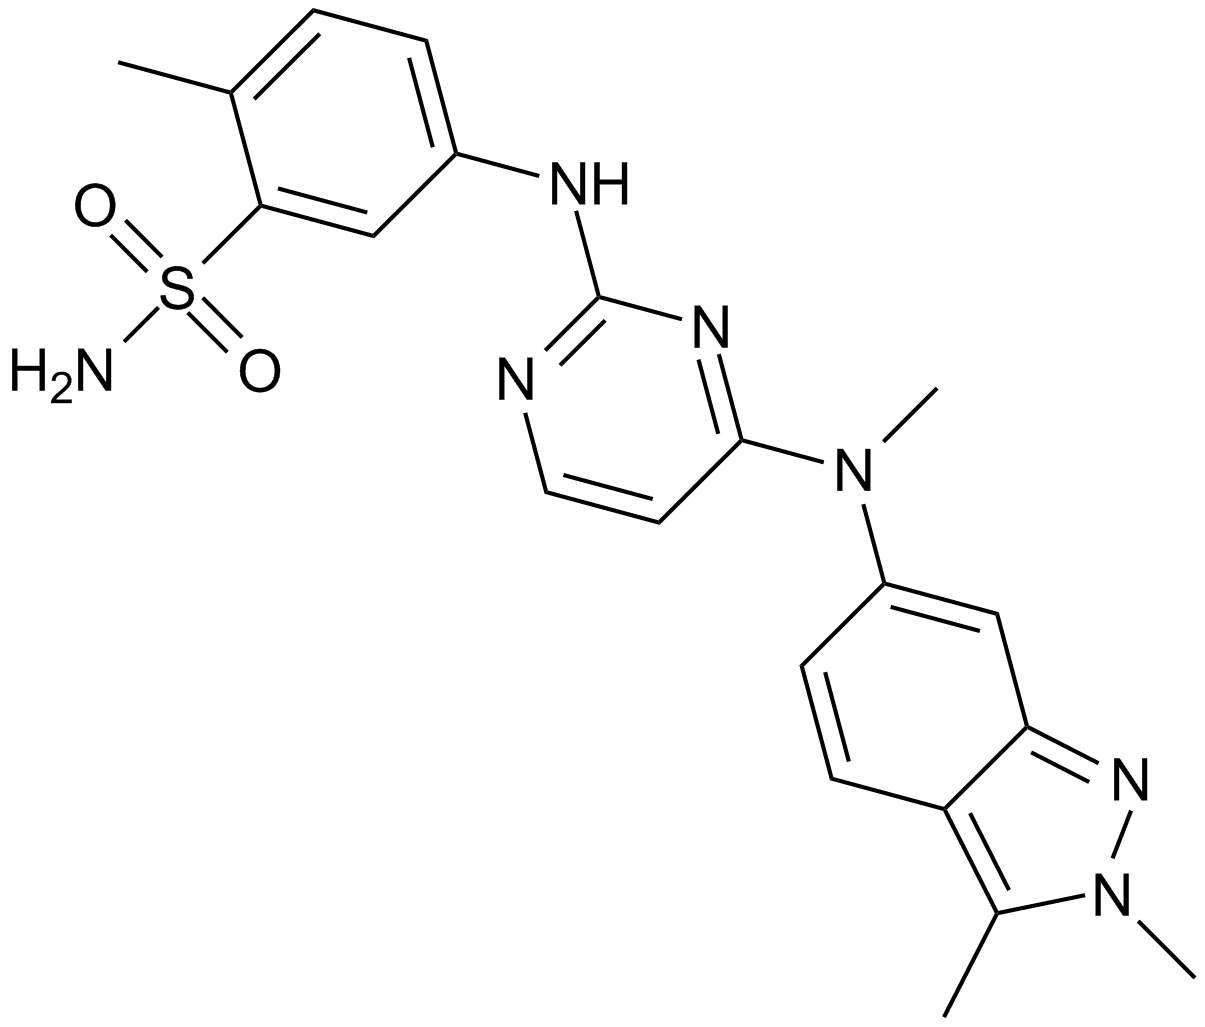 Pazopanib (GW-786034)